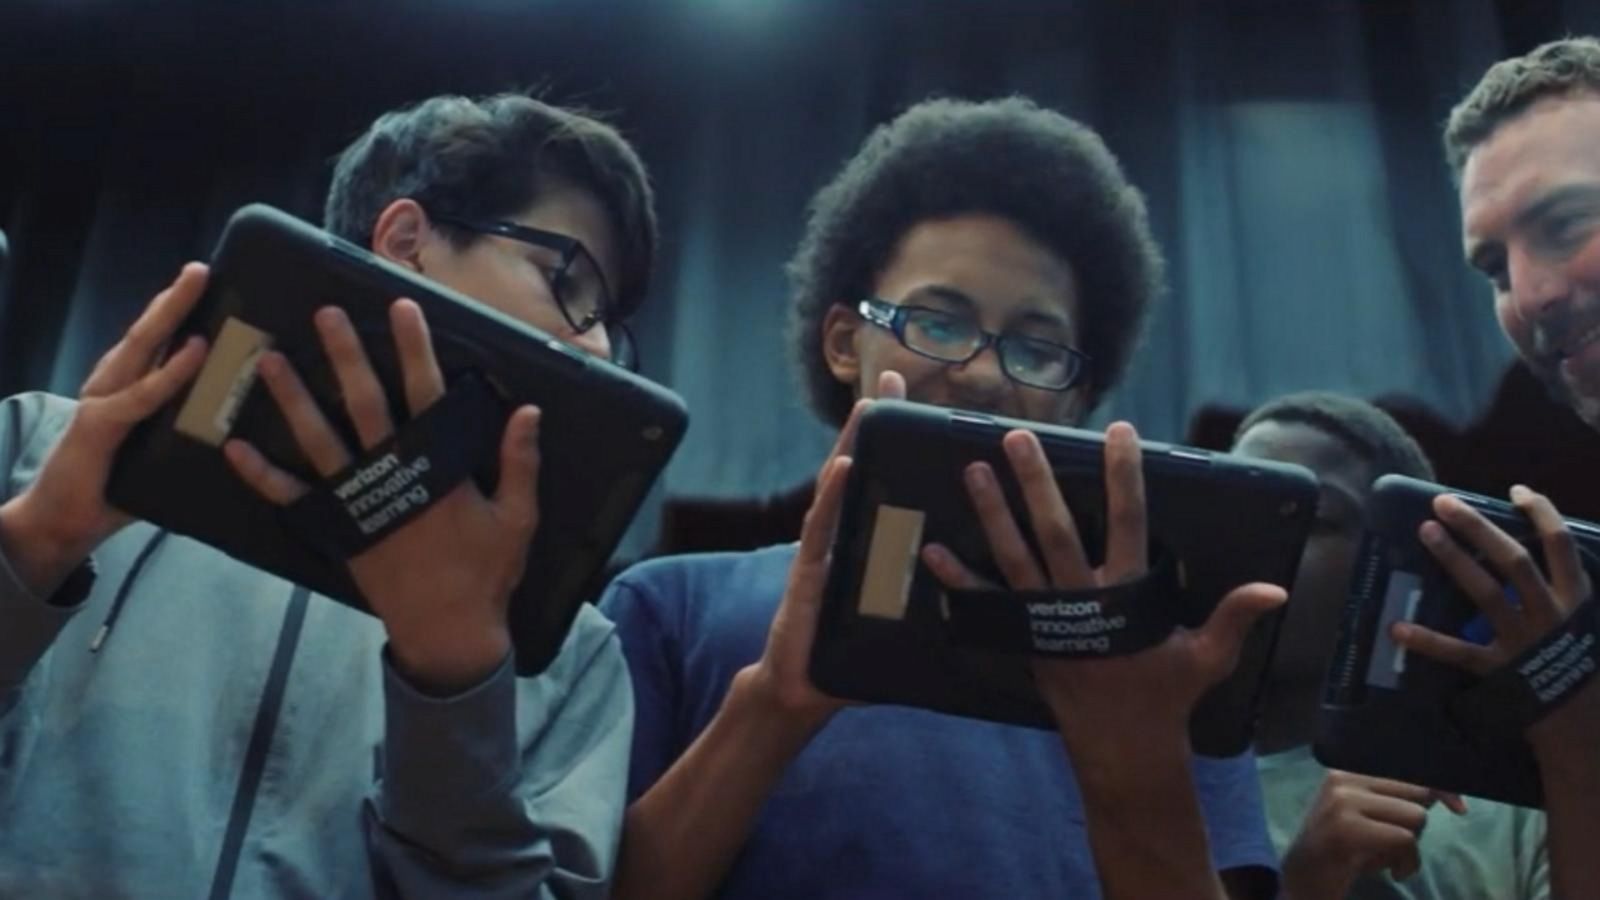 VIDEO: Verizon helps students access digital tools for school year